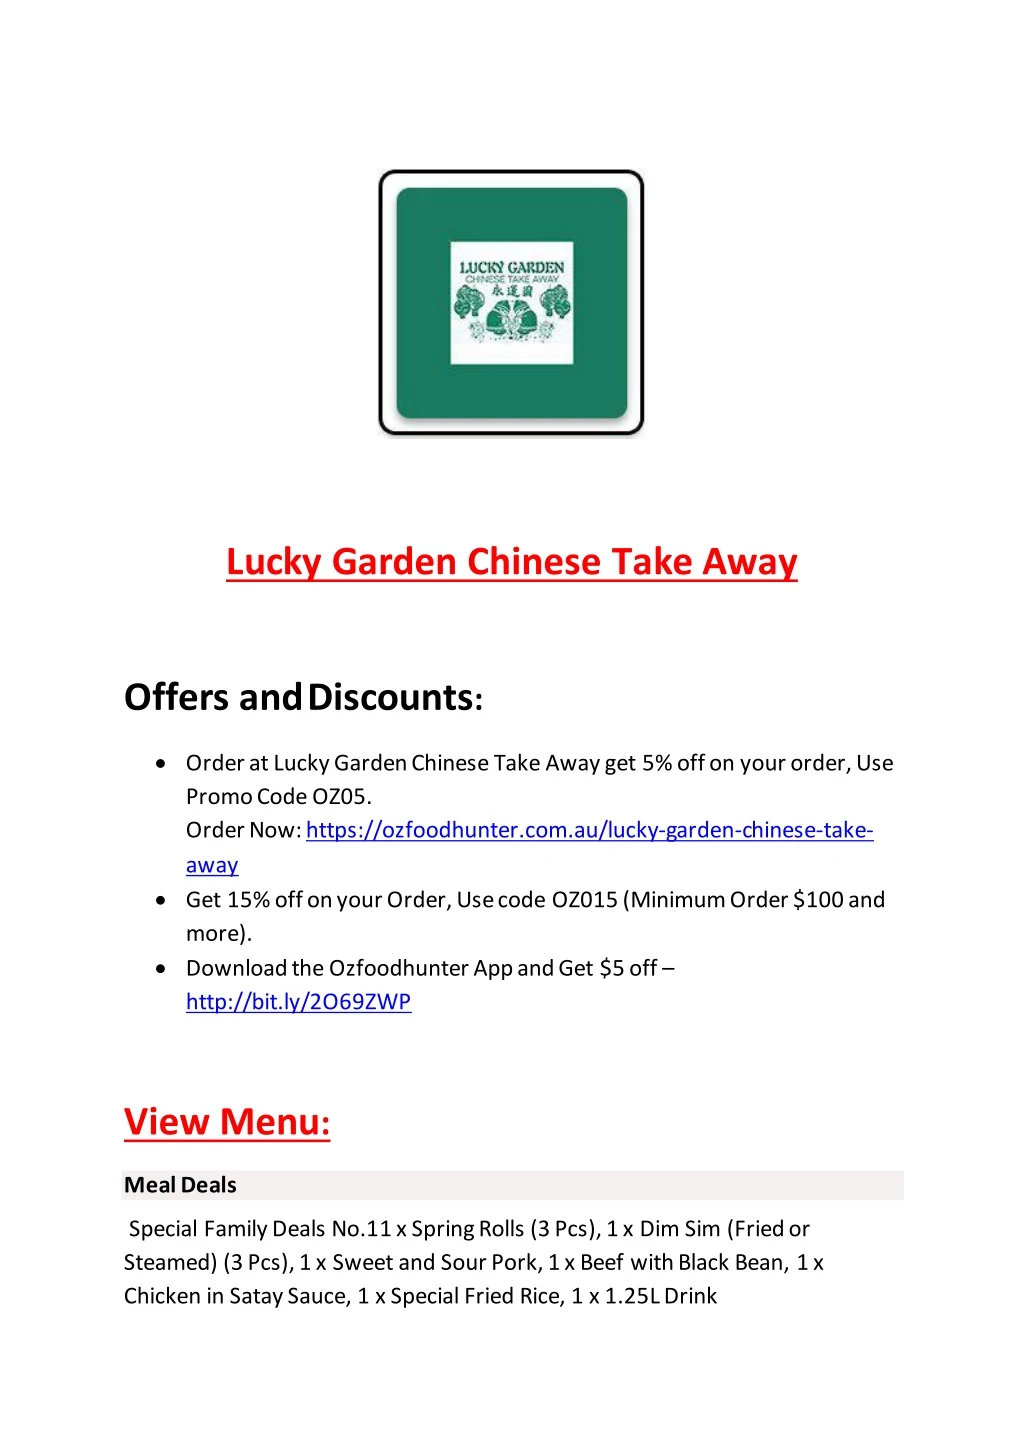 lucky garden chinese take away